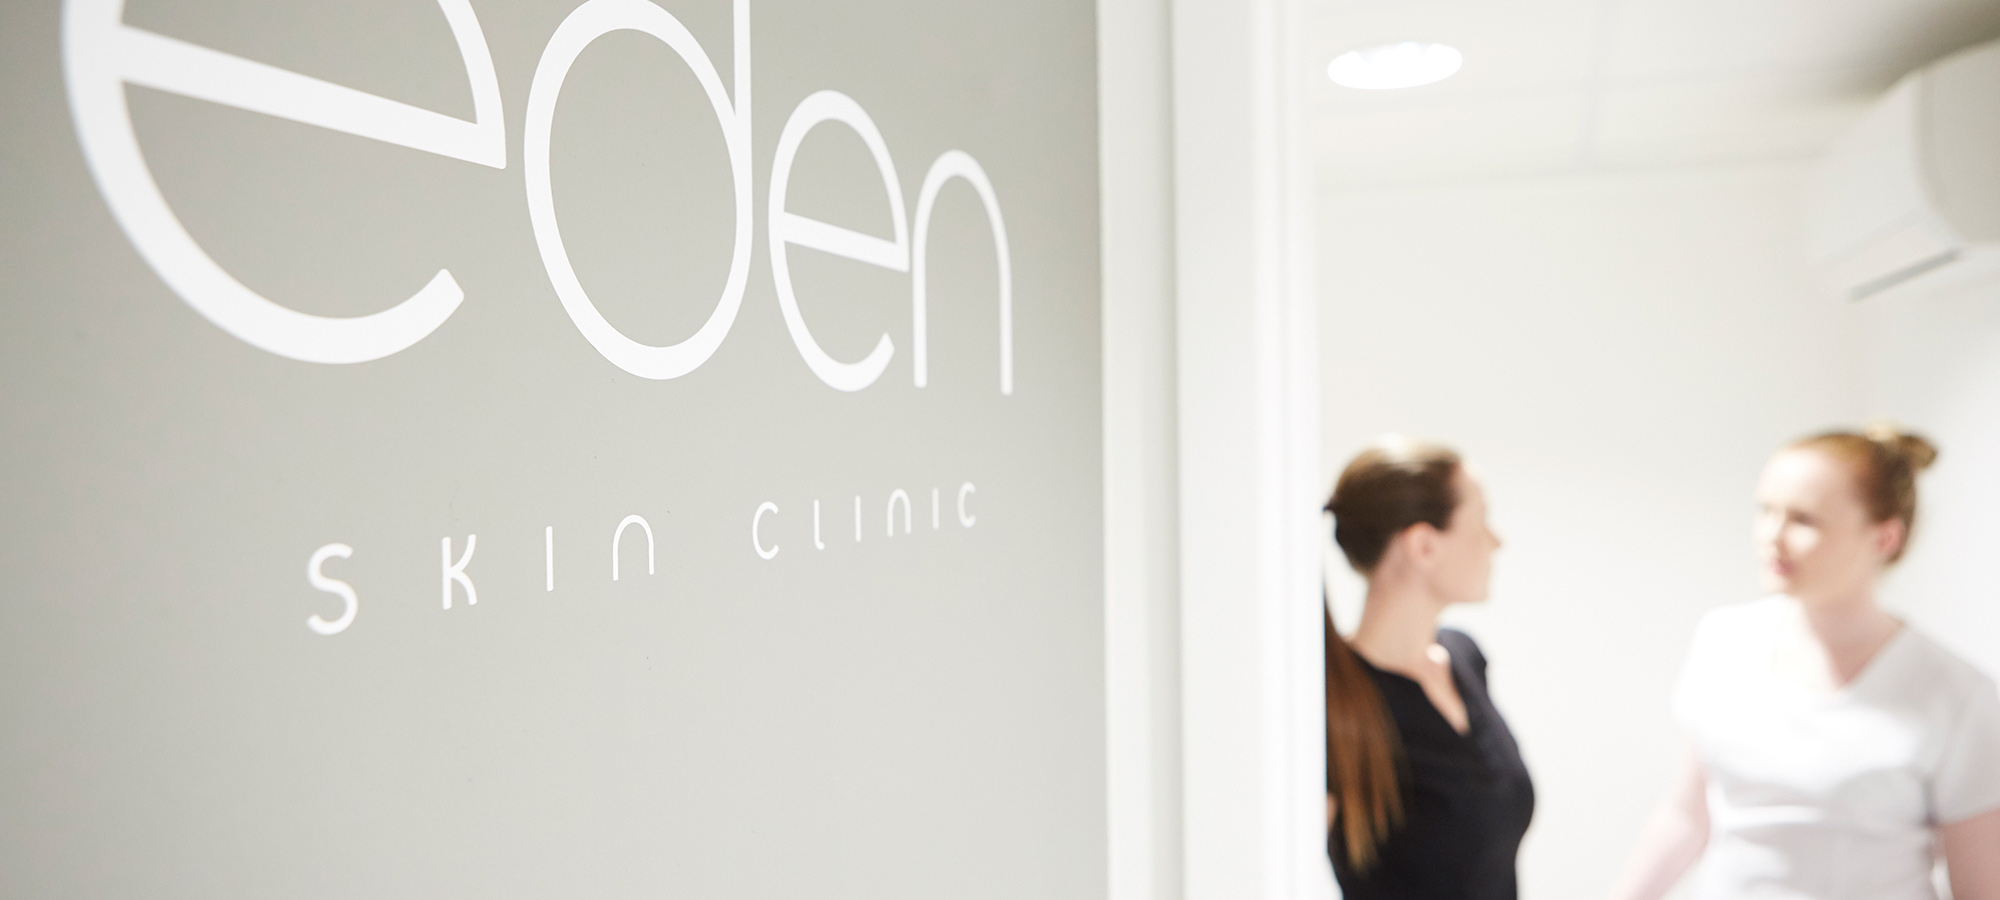 Eden Skin Clinic